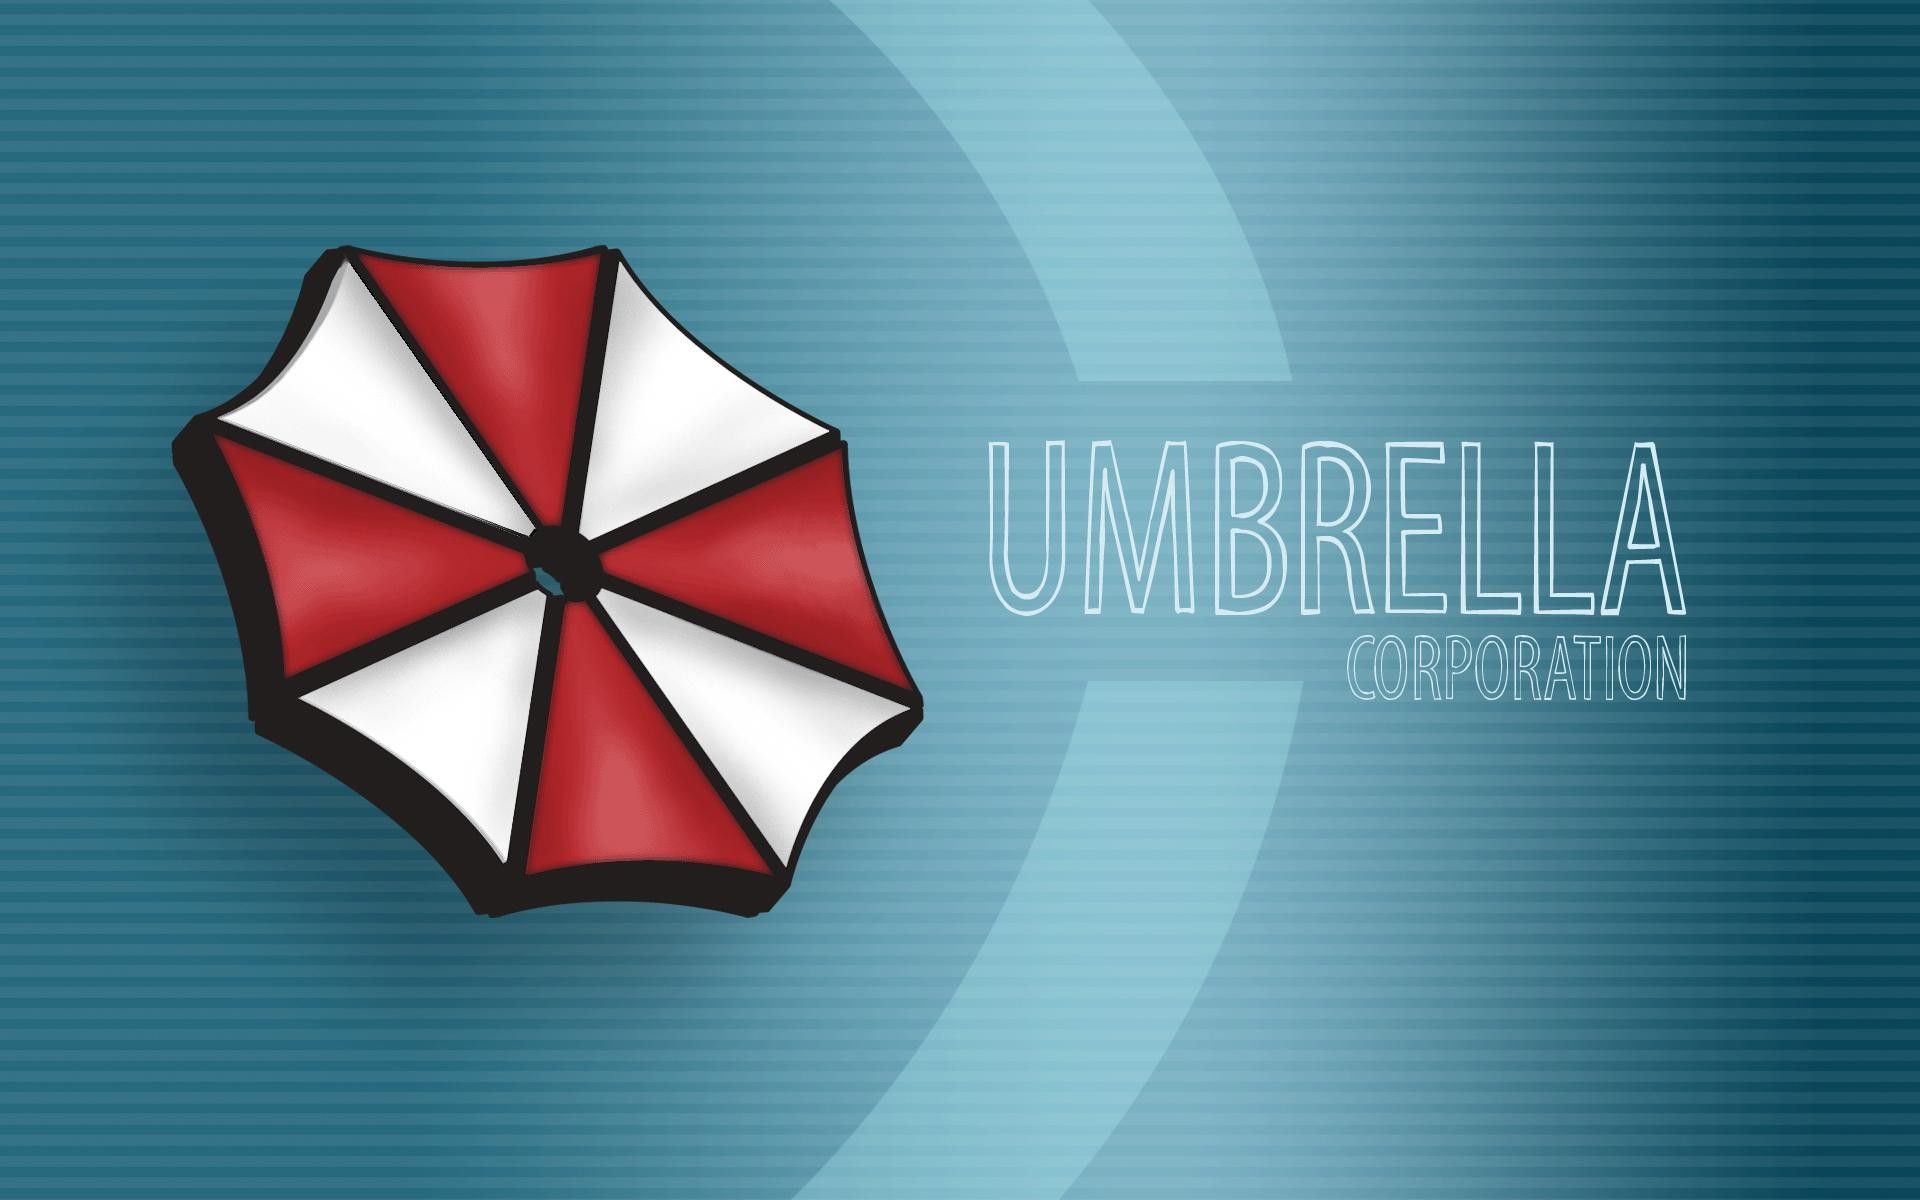 Umbrella Corporation Live